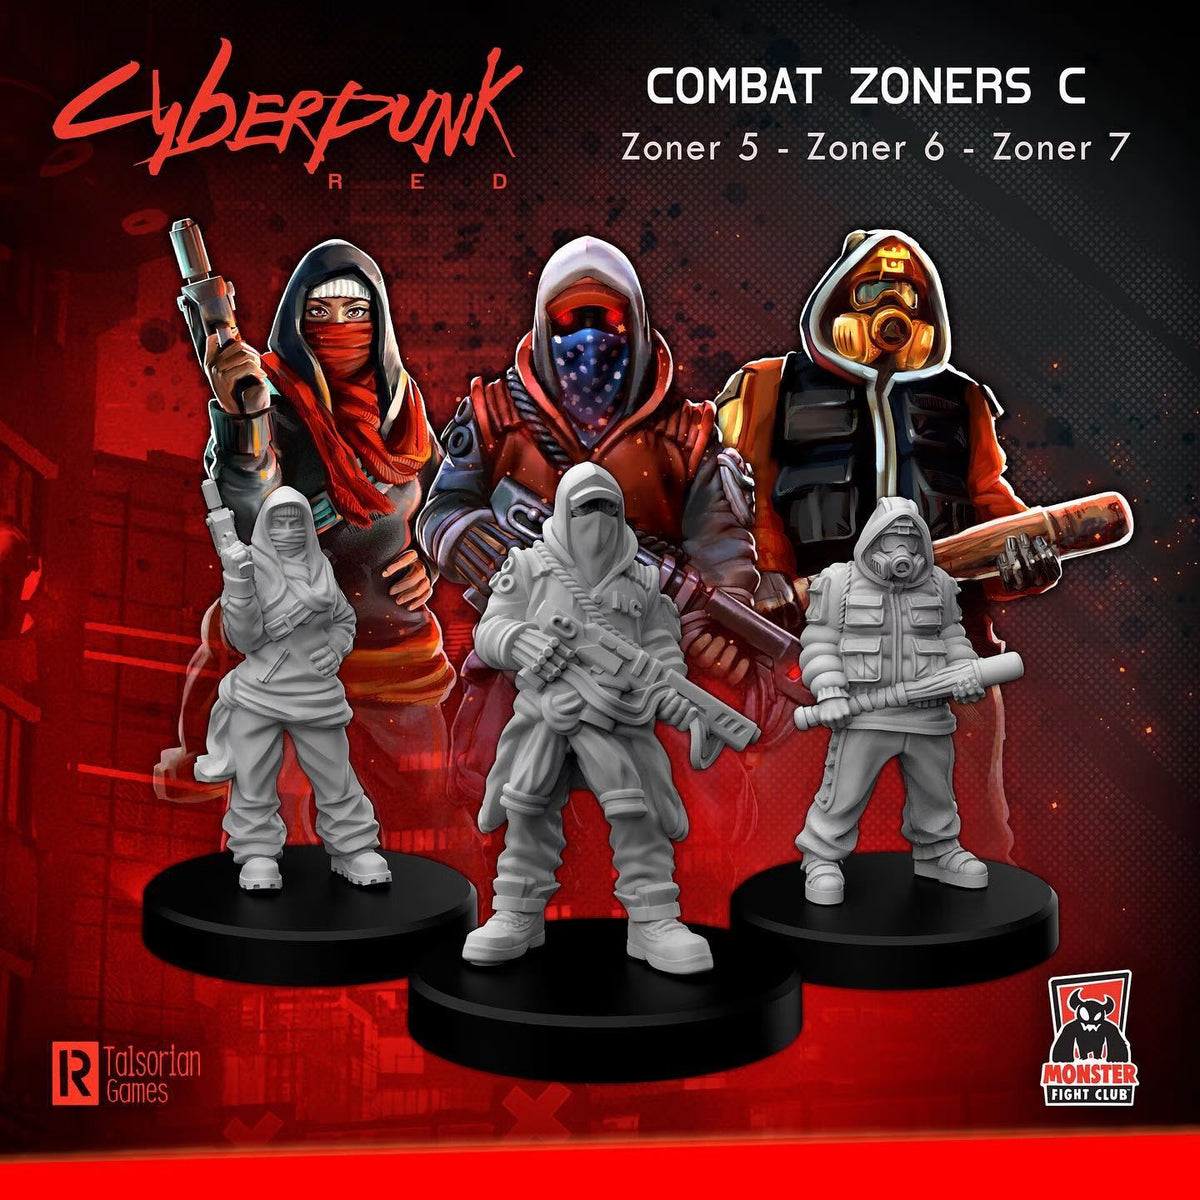 Cyberpunk Red: Combat Zoners C